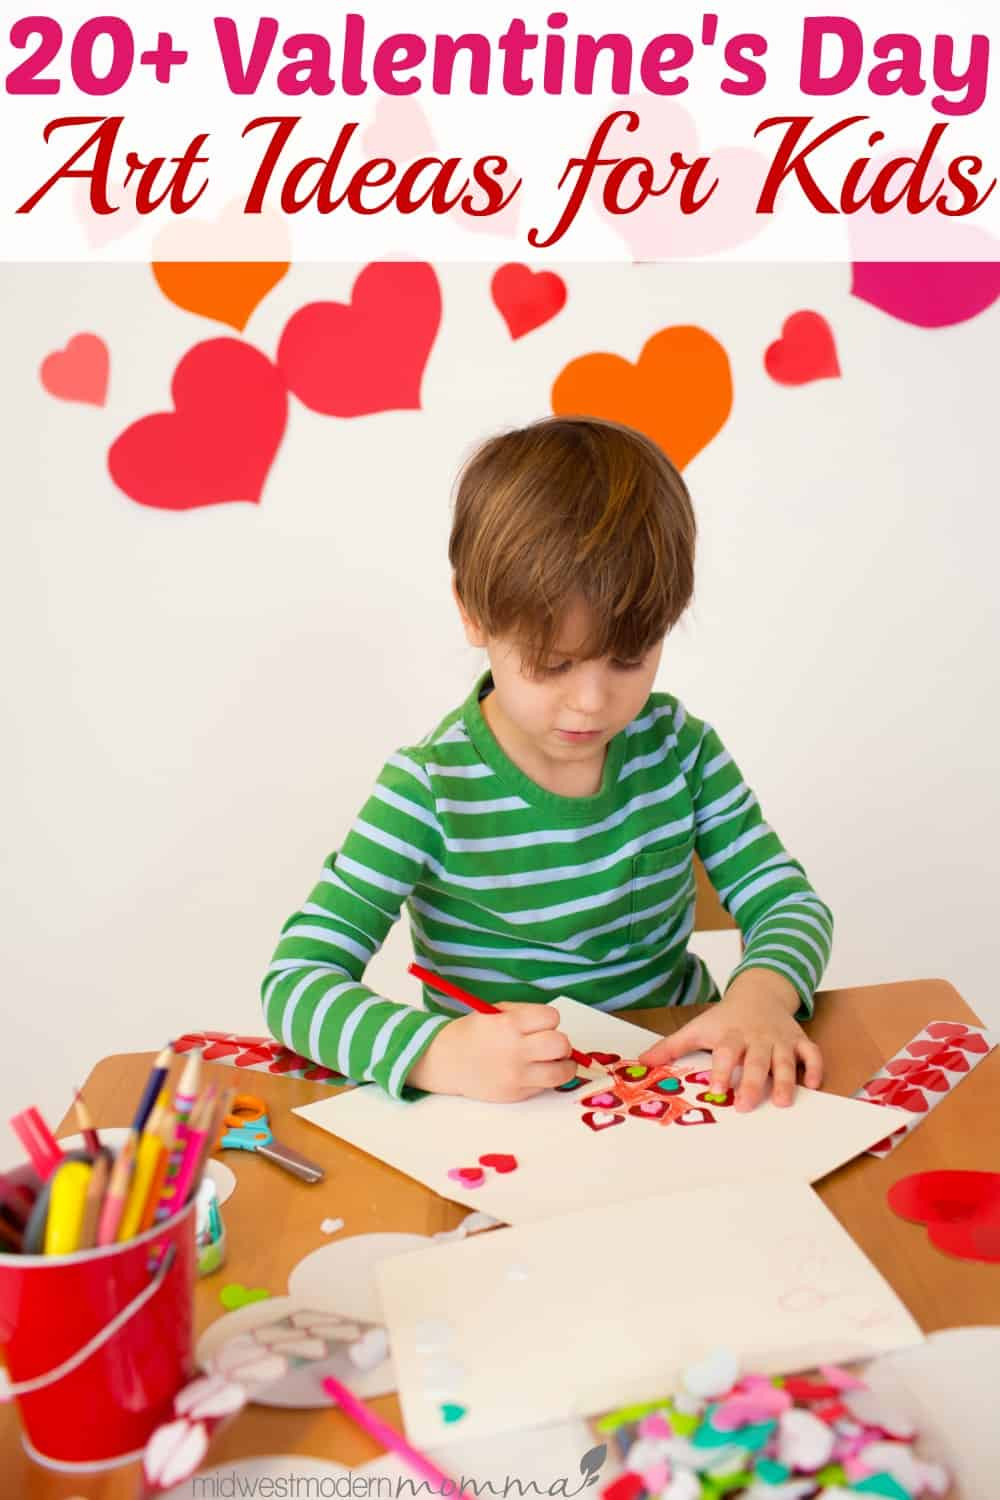 Valentines Day Ideas For Kids
 20 Fun Valentine s Day Art Ideas for Kids